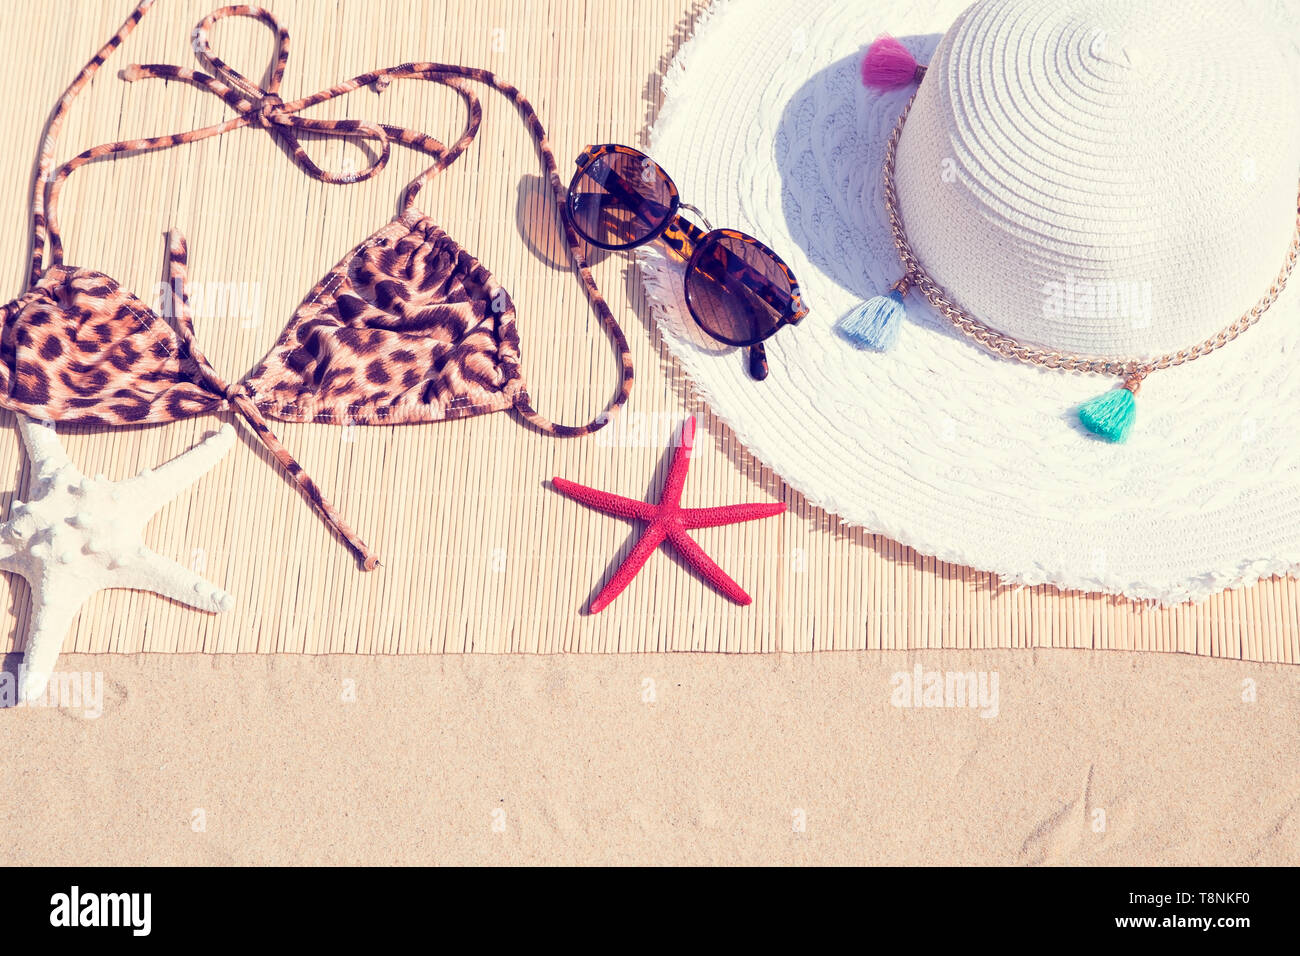 Woman's beach accessories on sand Stock Photo